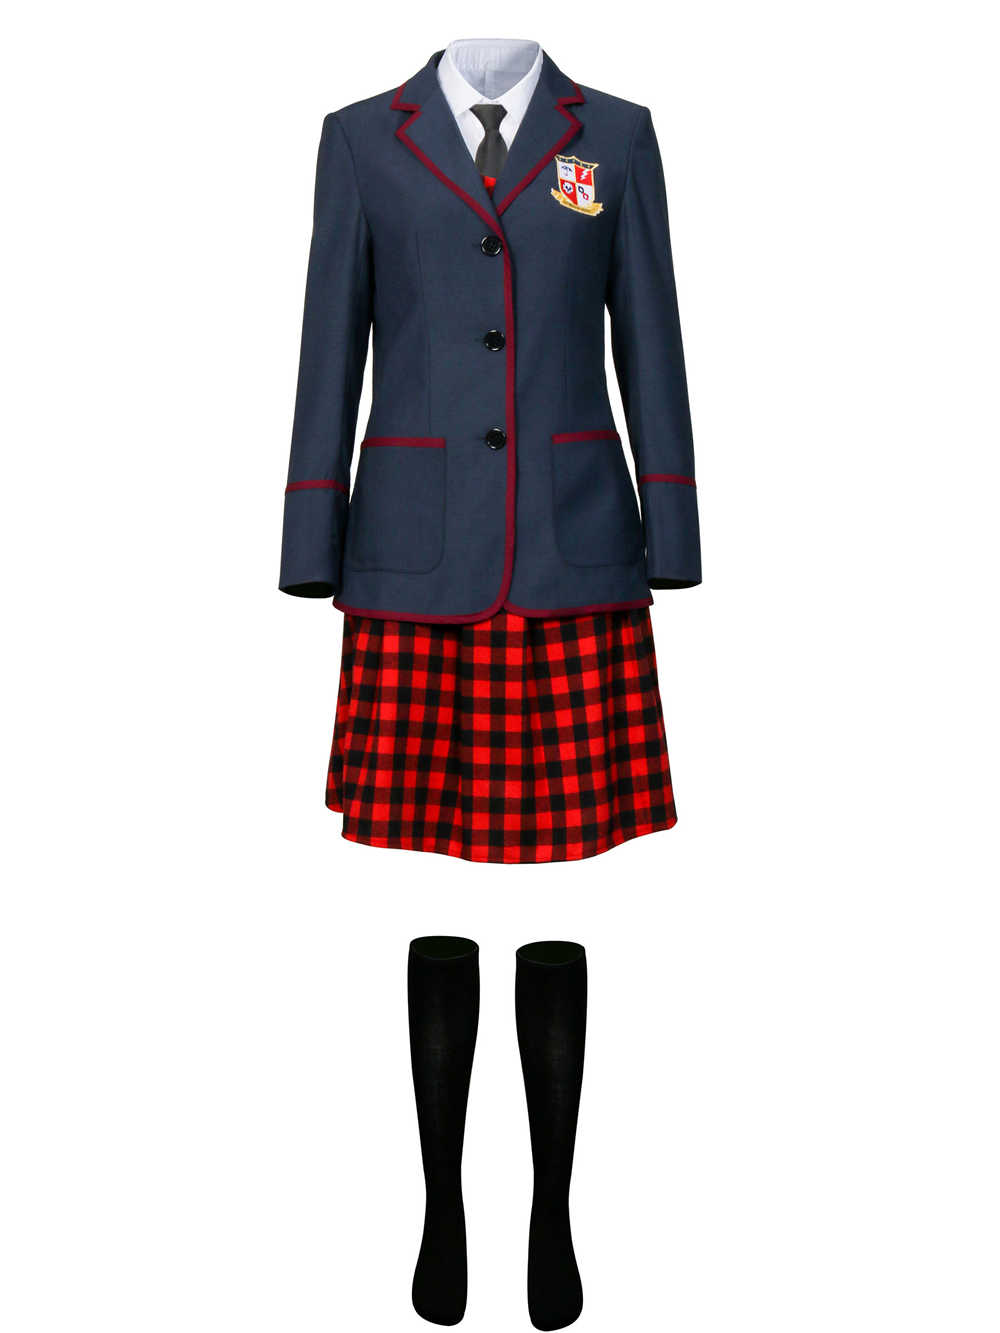 The Umberlla Academy School Uniform Vanya Hargreeves Allison Hargreeves Women Cosplay Costume